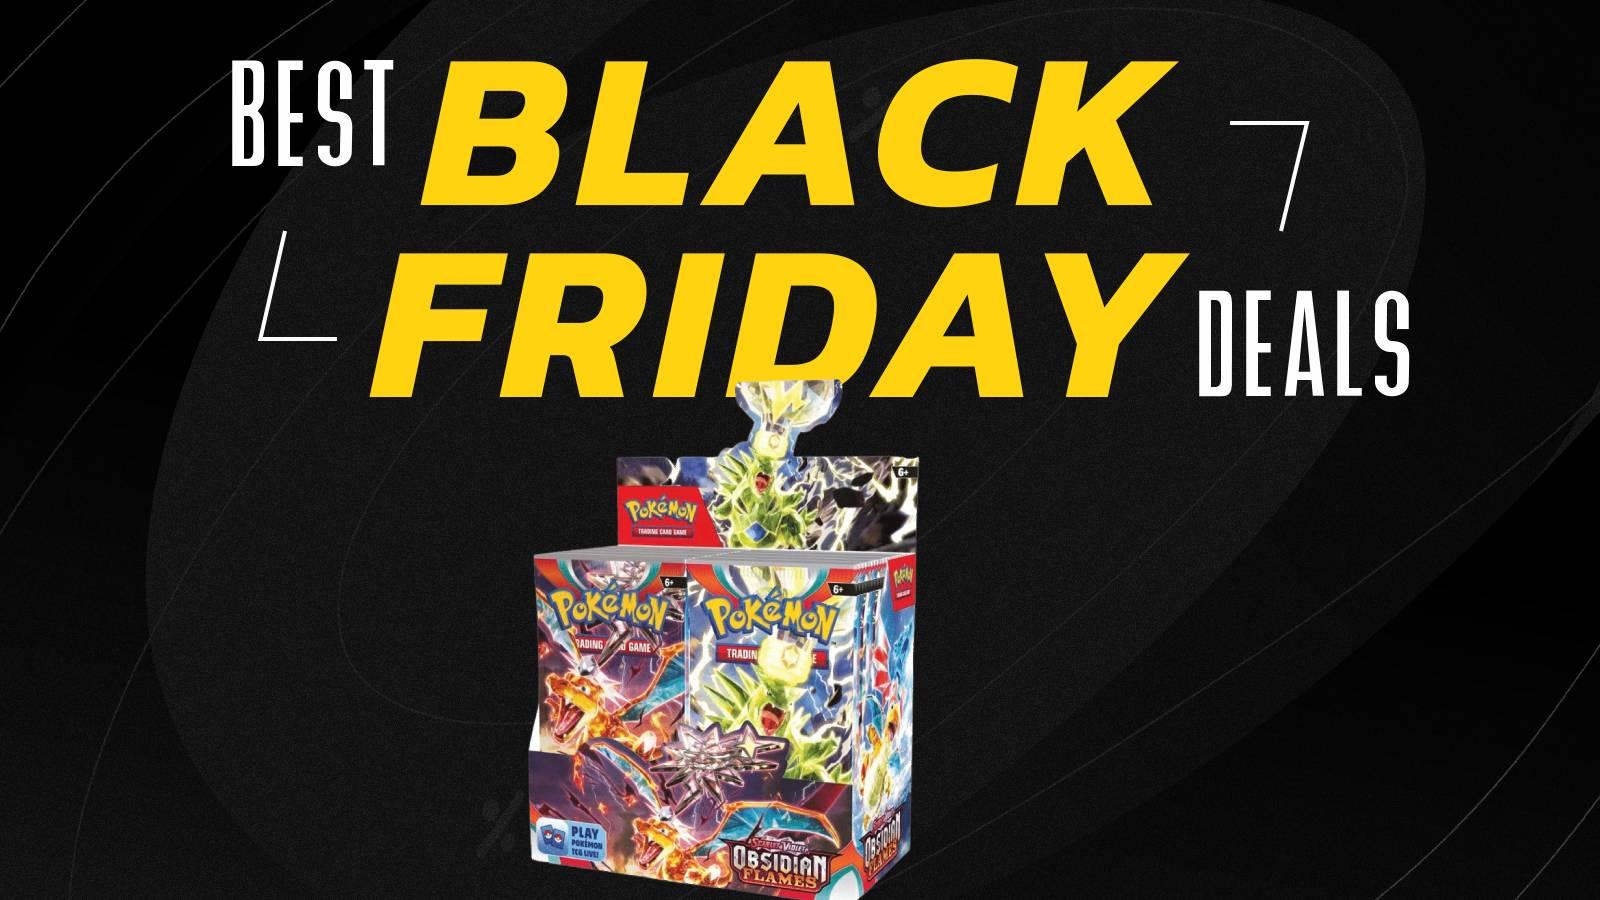 Pokemon TCG obsidian flames booster box below text reading Best Black Friday Deals